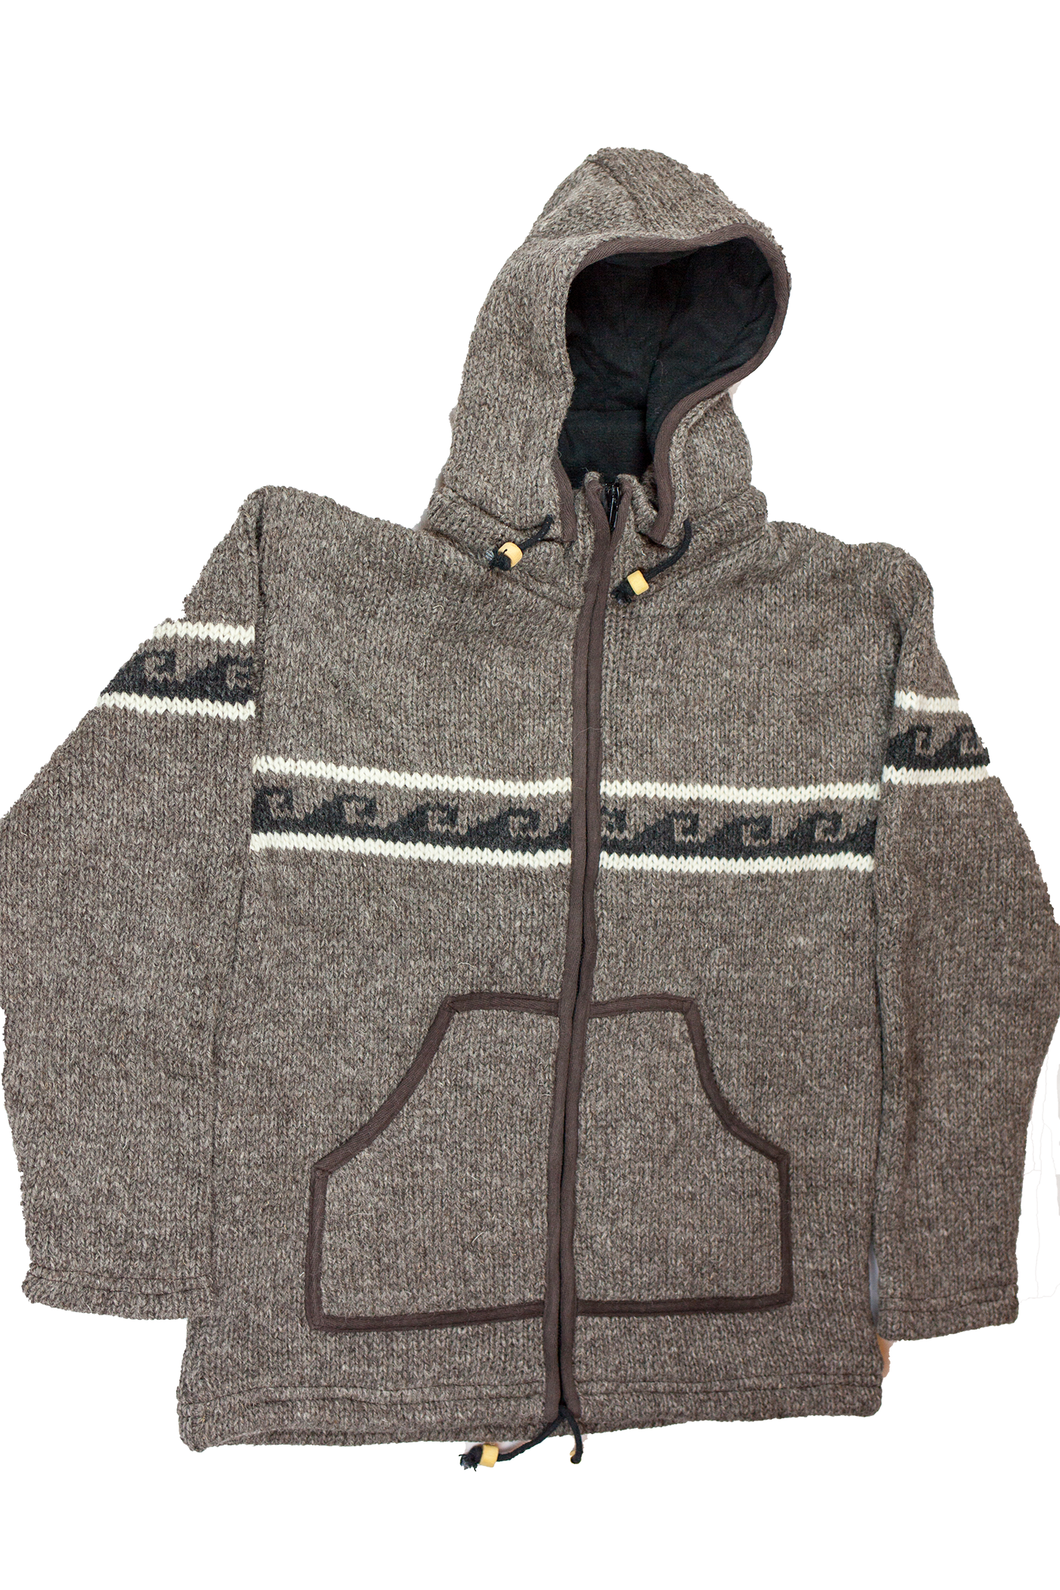 Hand knitted woolen jacket/sweater with soft inner fleece - HMPWJ15